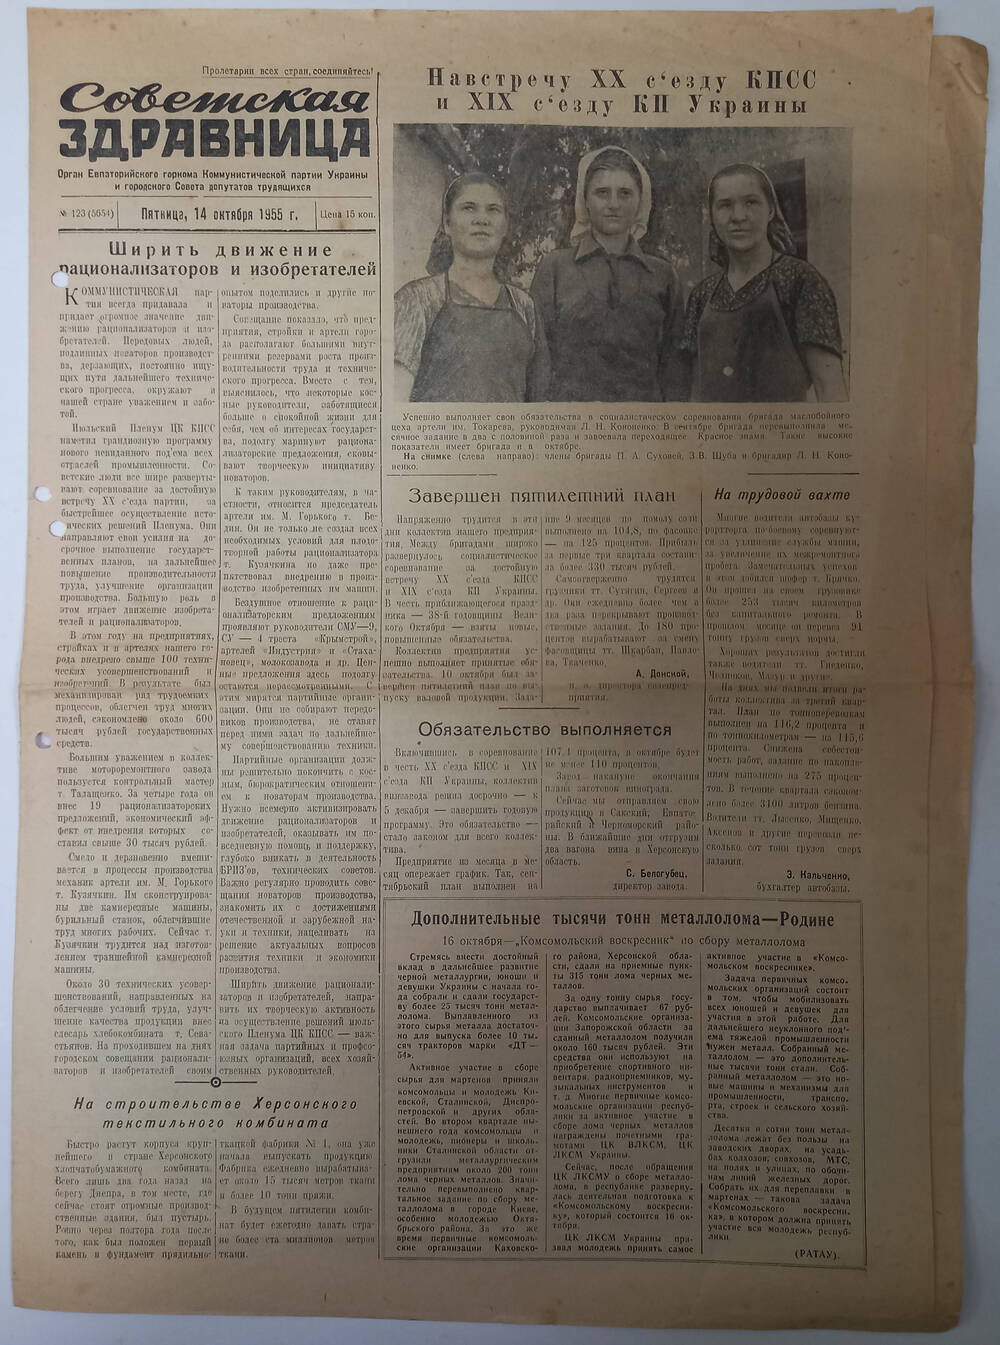 Газета Советская здравница №123(5654) от 14.10.1955 г.